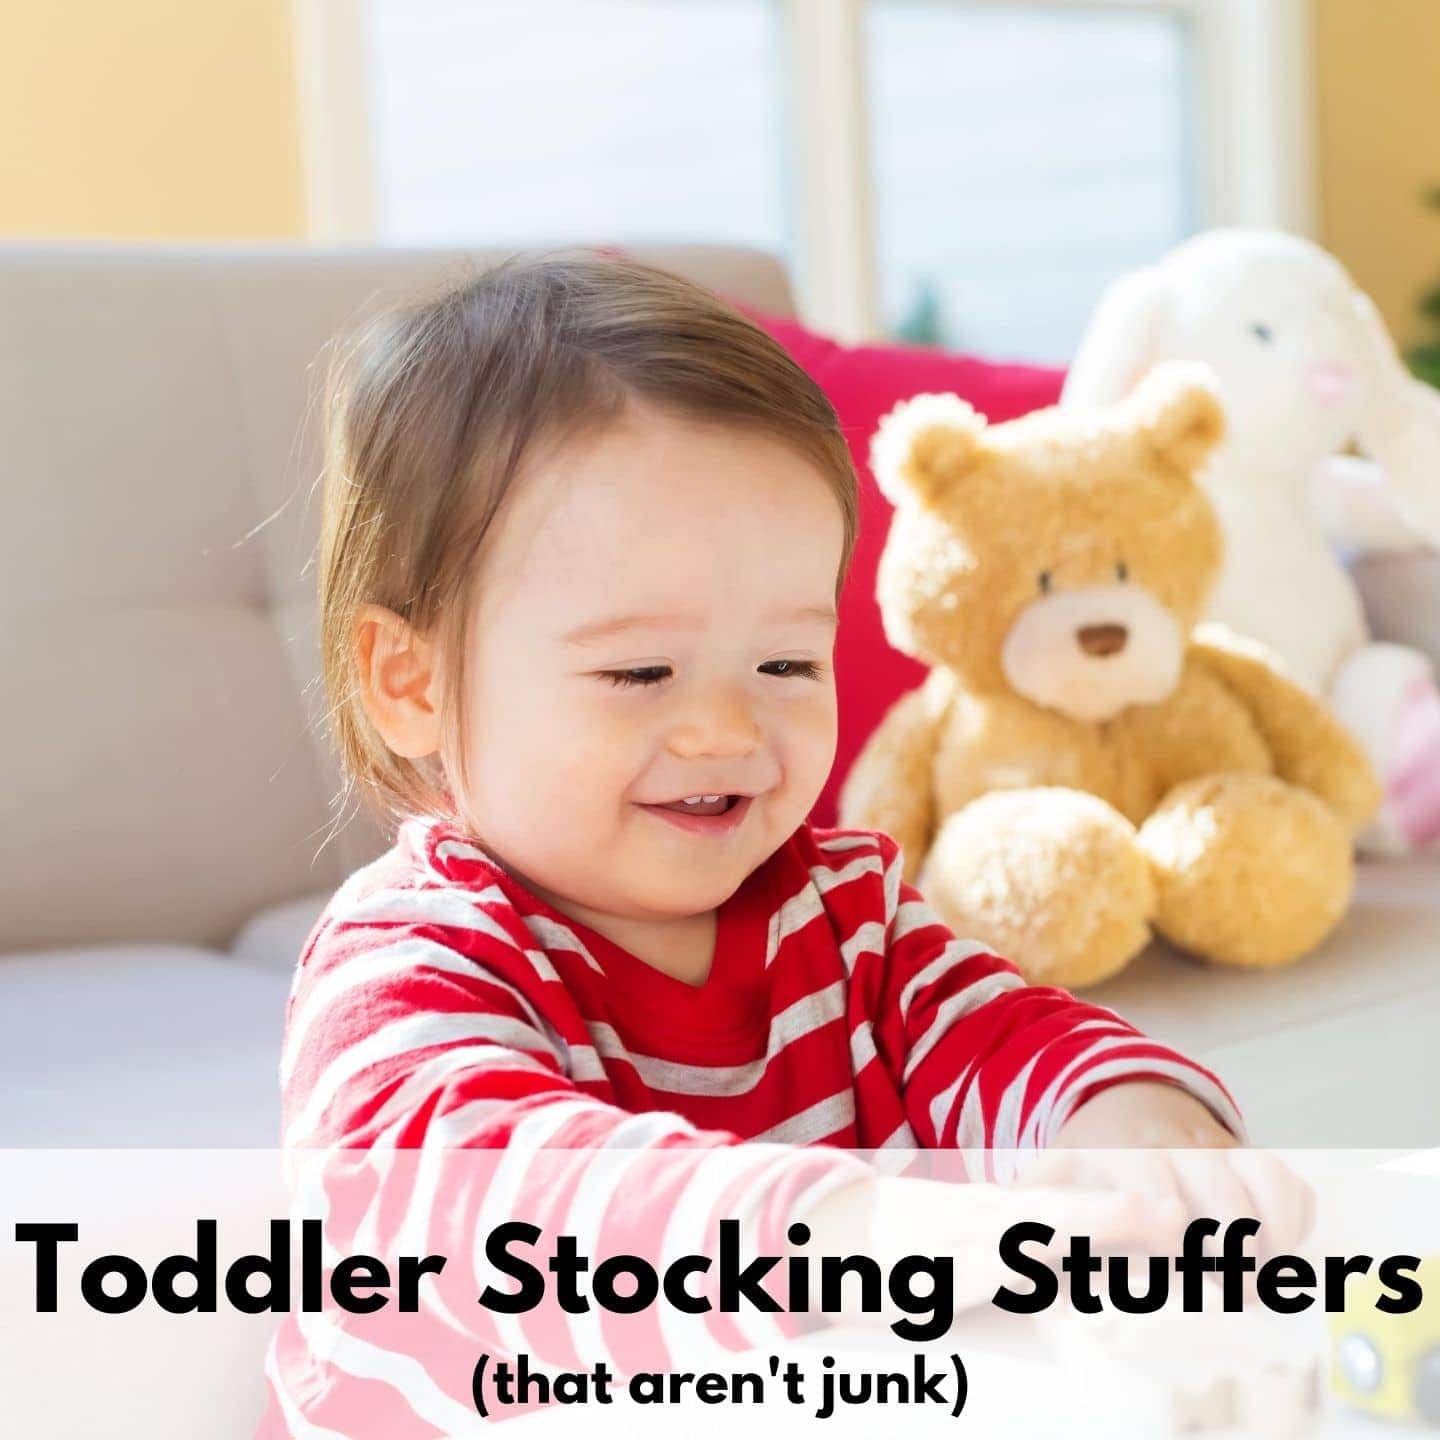 https://natashalh.com/wp-content/uploads/2019/09/toddler-stocking-stuffers-that-arent-junk-2.jpg